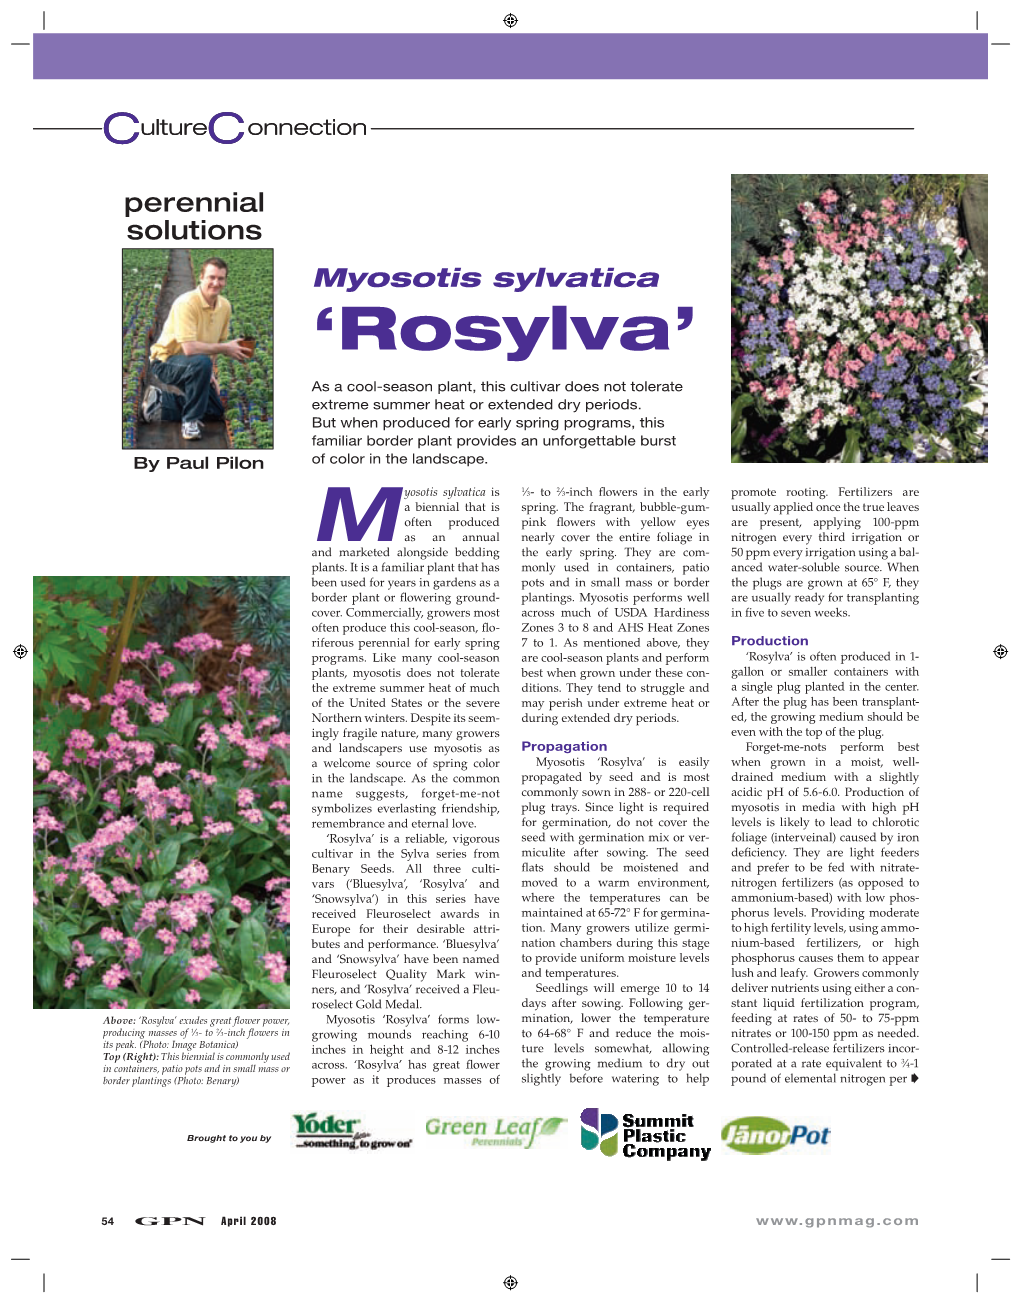 Myosotis Sylvatica 'Rosylva'